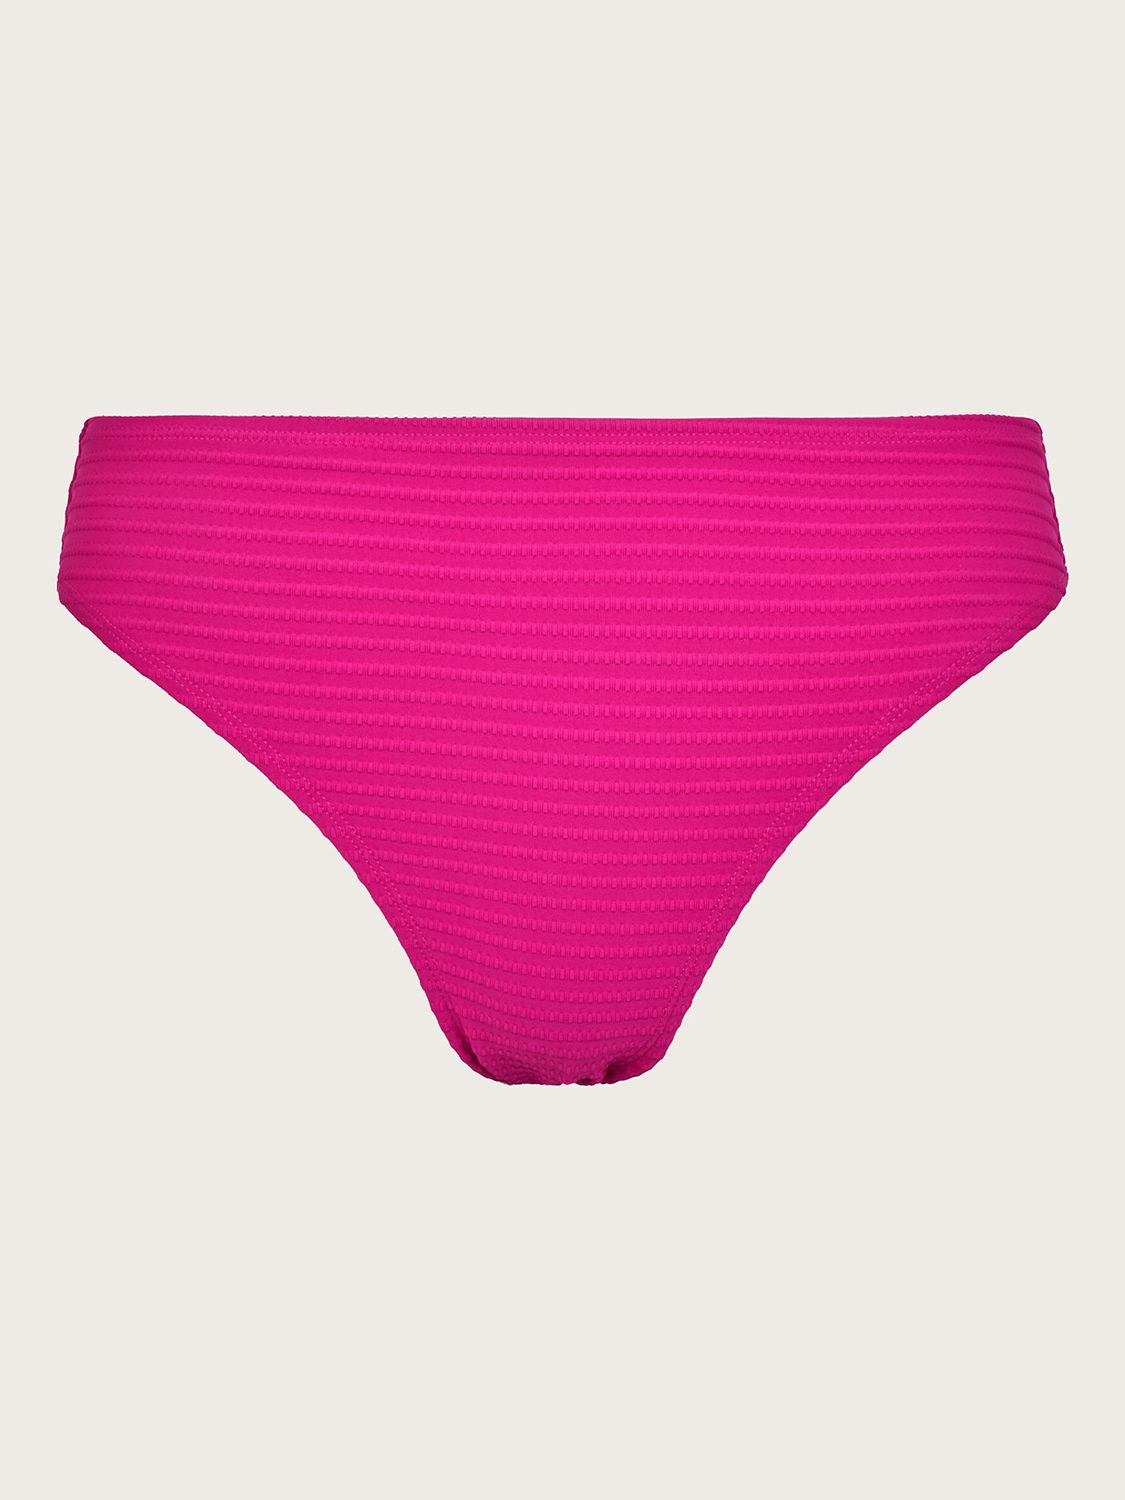 Monsoon Maria Bikini Bottoms, Pink, 8